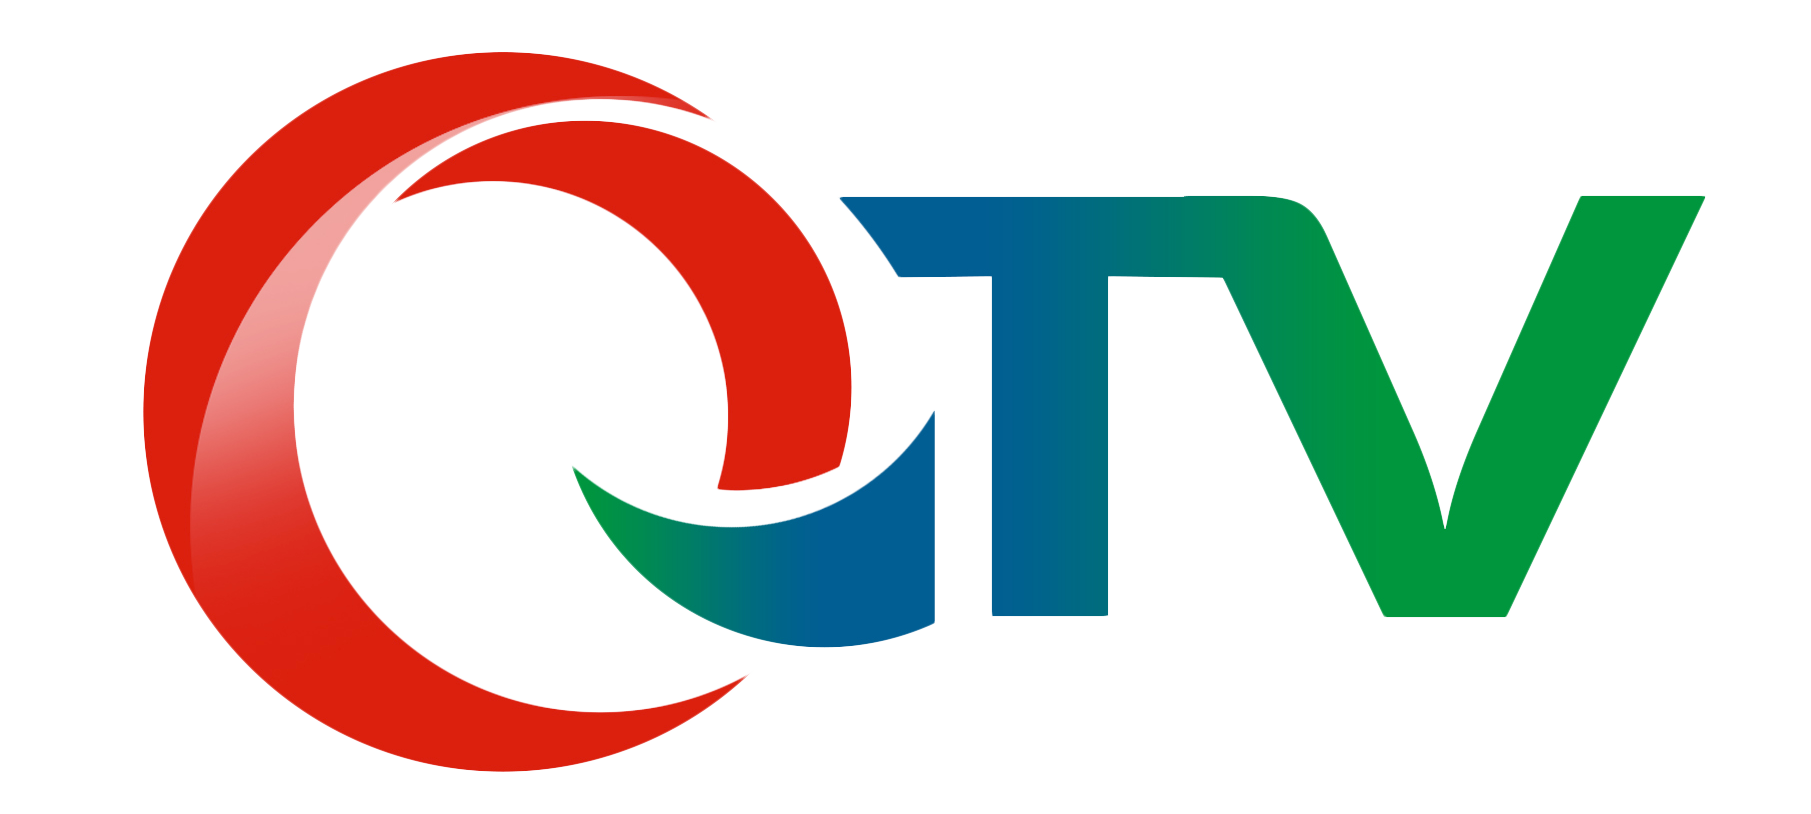 QTV Gambia